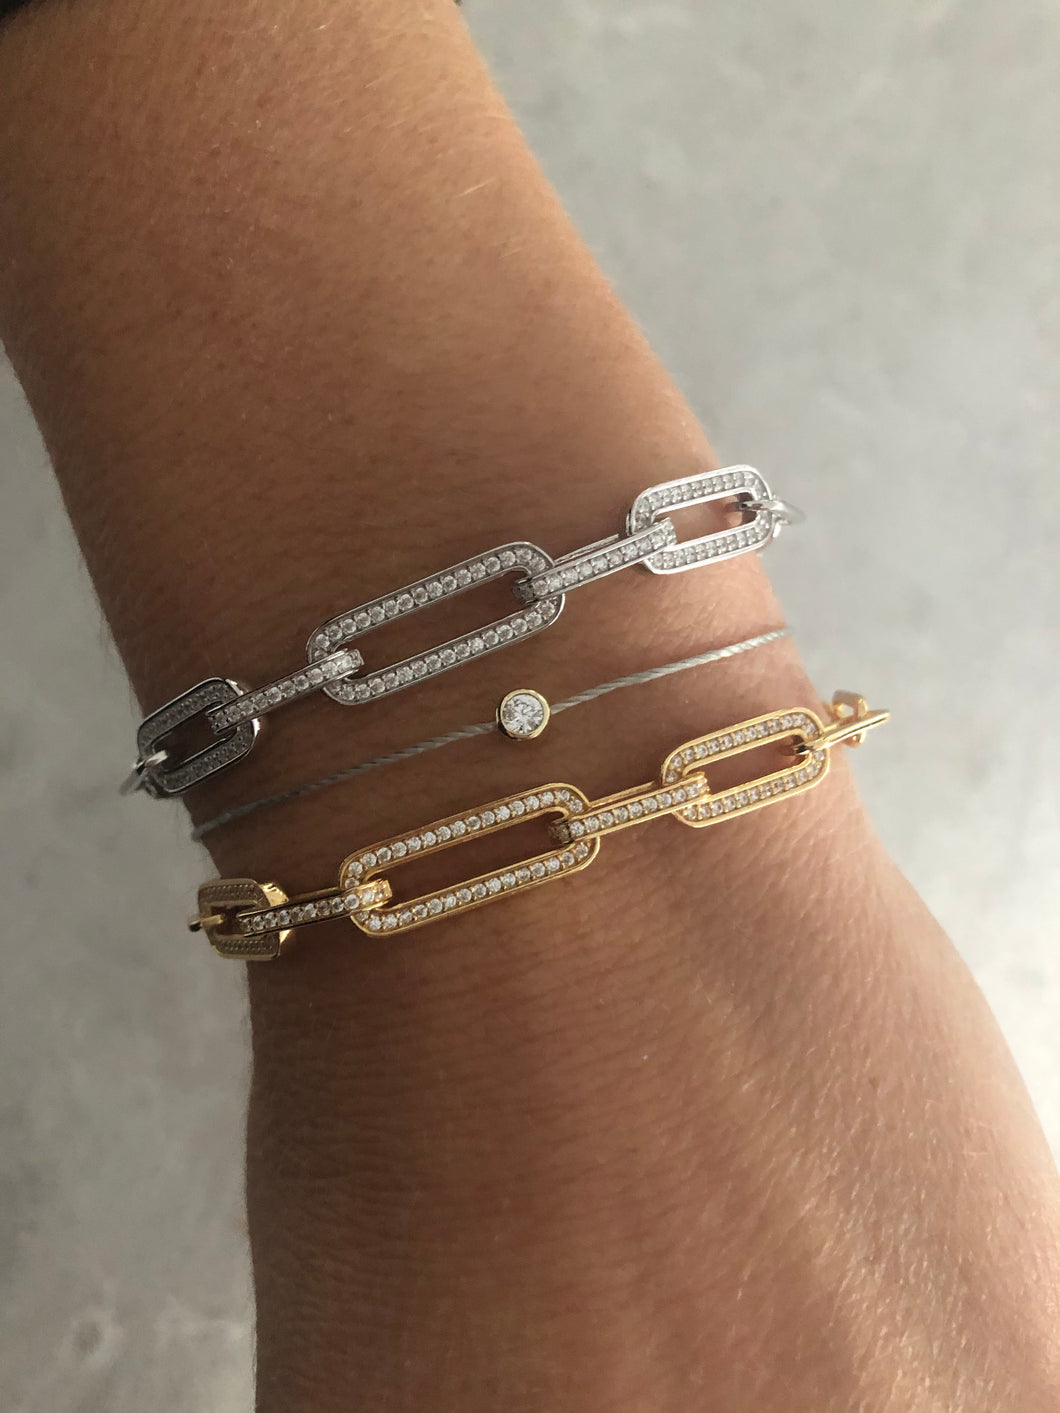 Chain link bracelet with pave cz stones